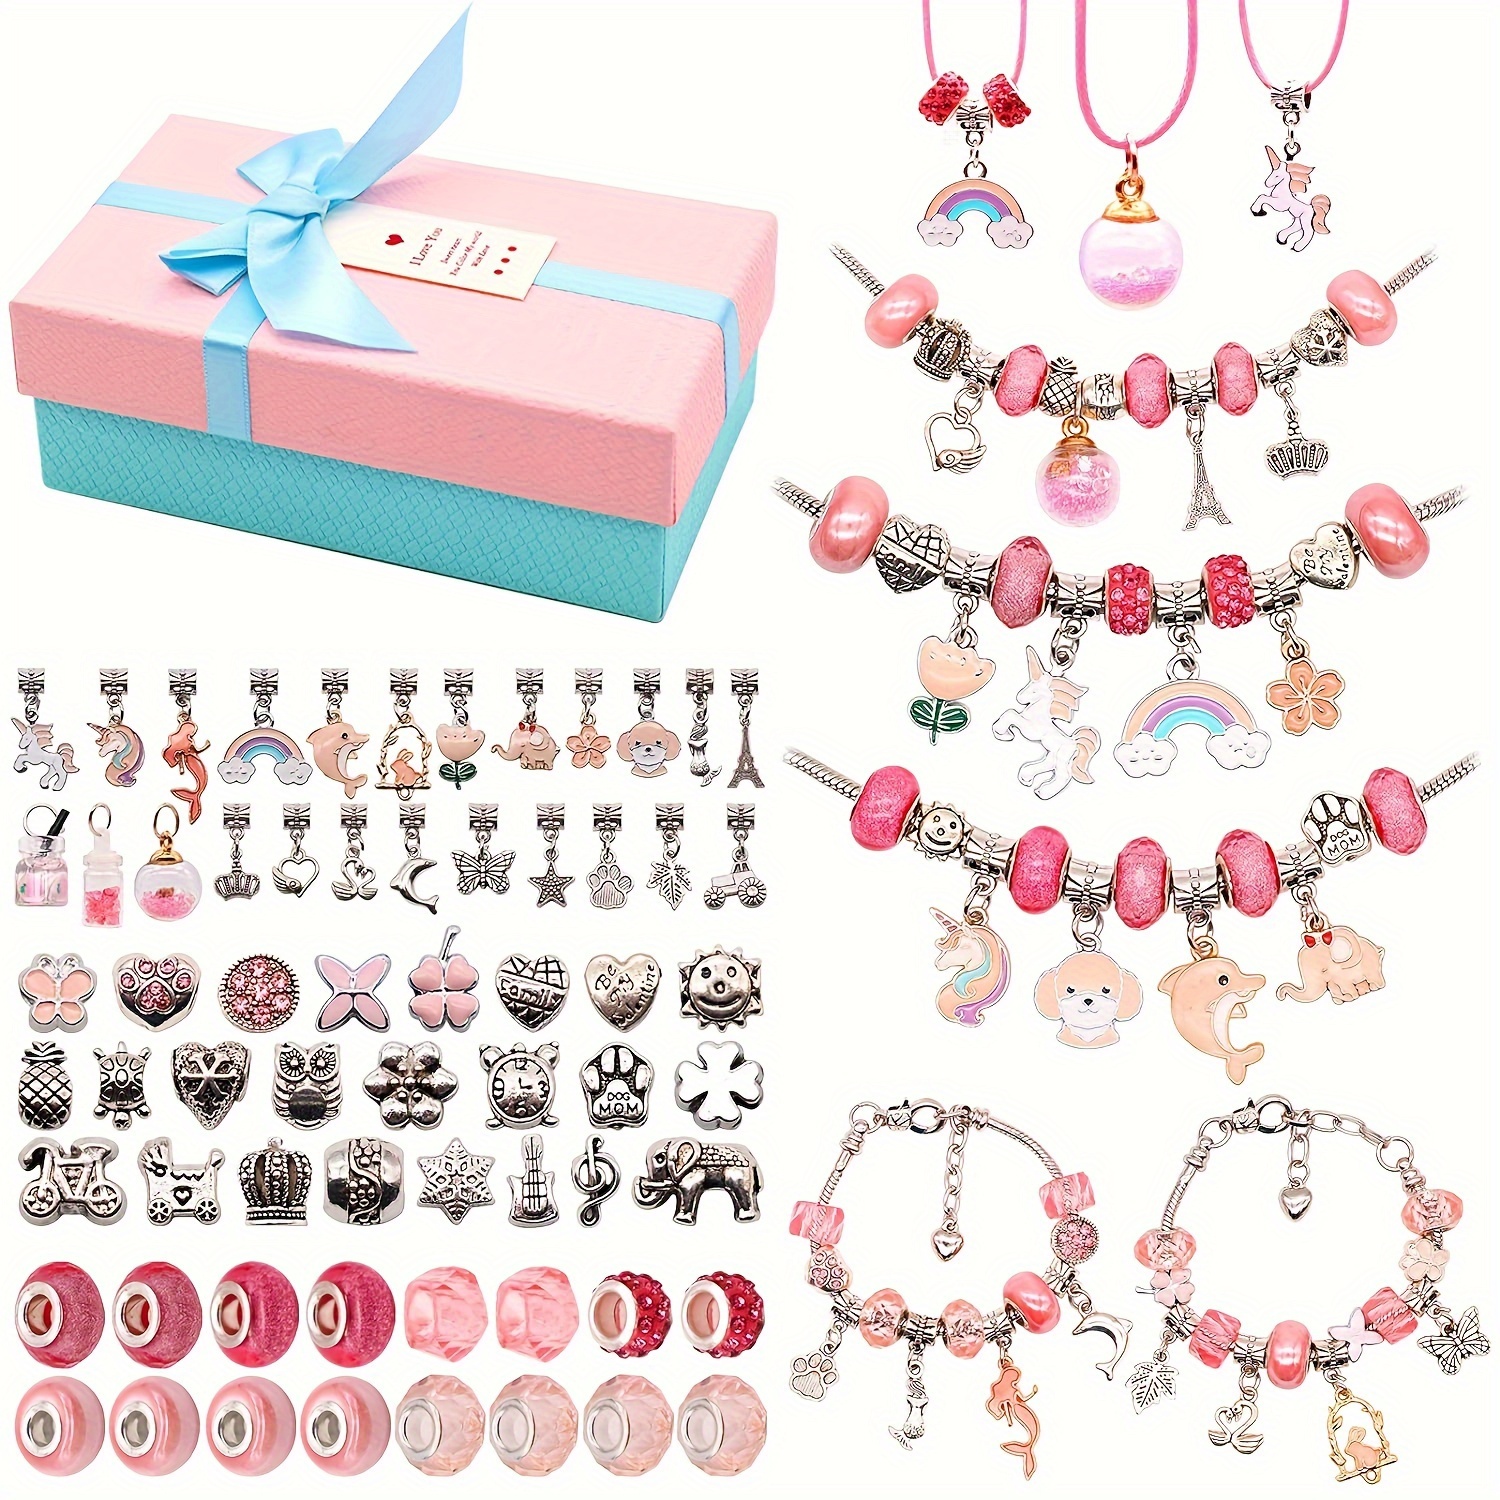 Handmade Beads Bracelet Making Kit For Girls Birthday Gift, 8mm Gradient  Beads For DIY Jewelry Making With Star Flower Pumpkin Beads